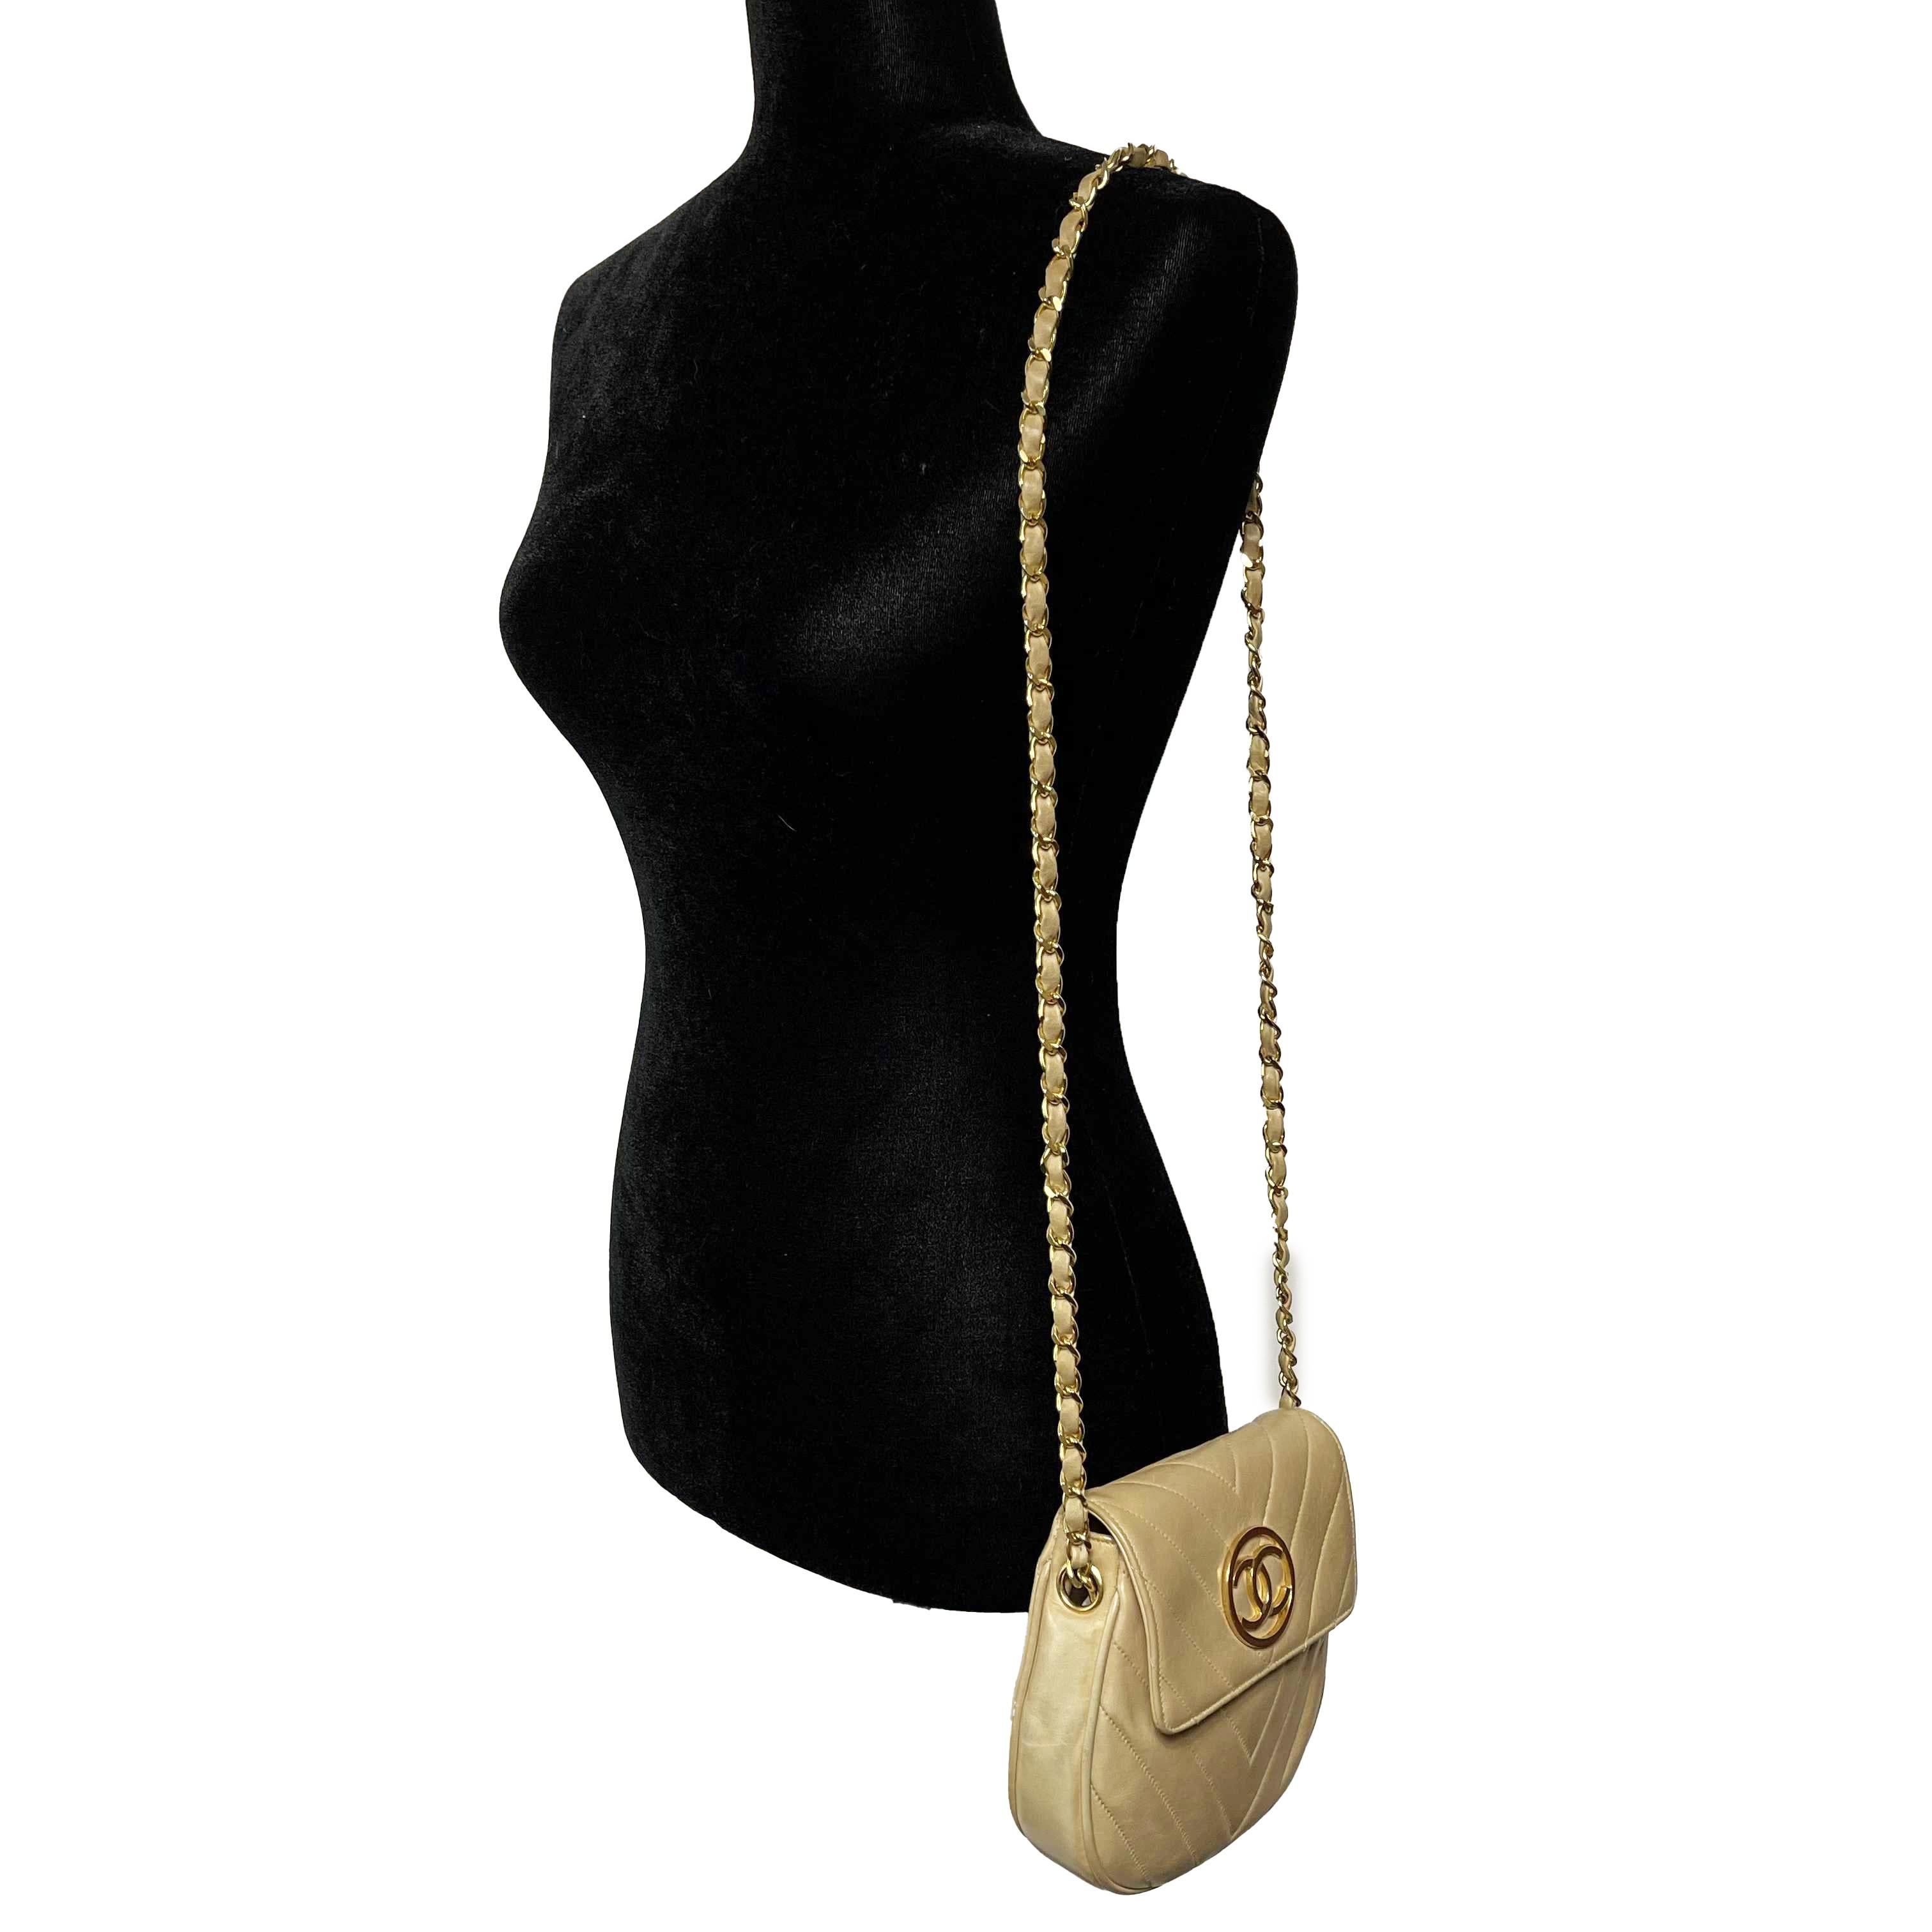 Chanel - Excellent - 90's Vintage Chevron Flap 24k - Beige, Gold - Handbag 1